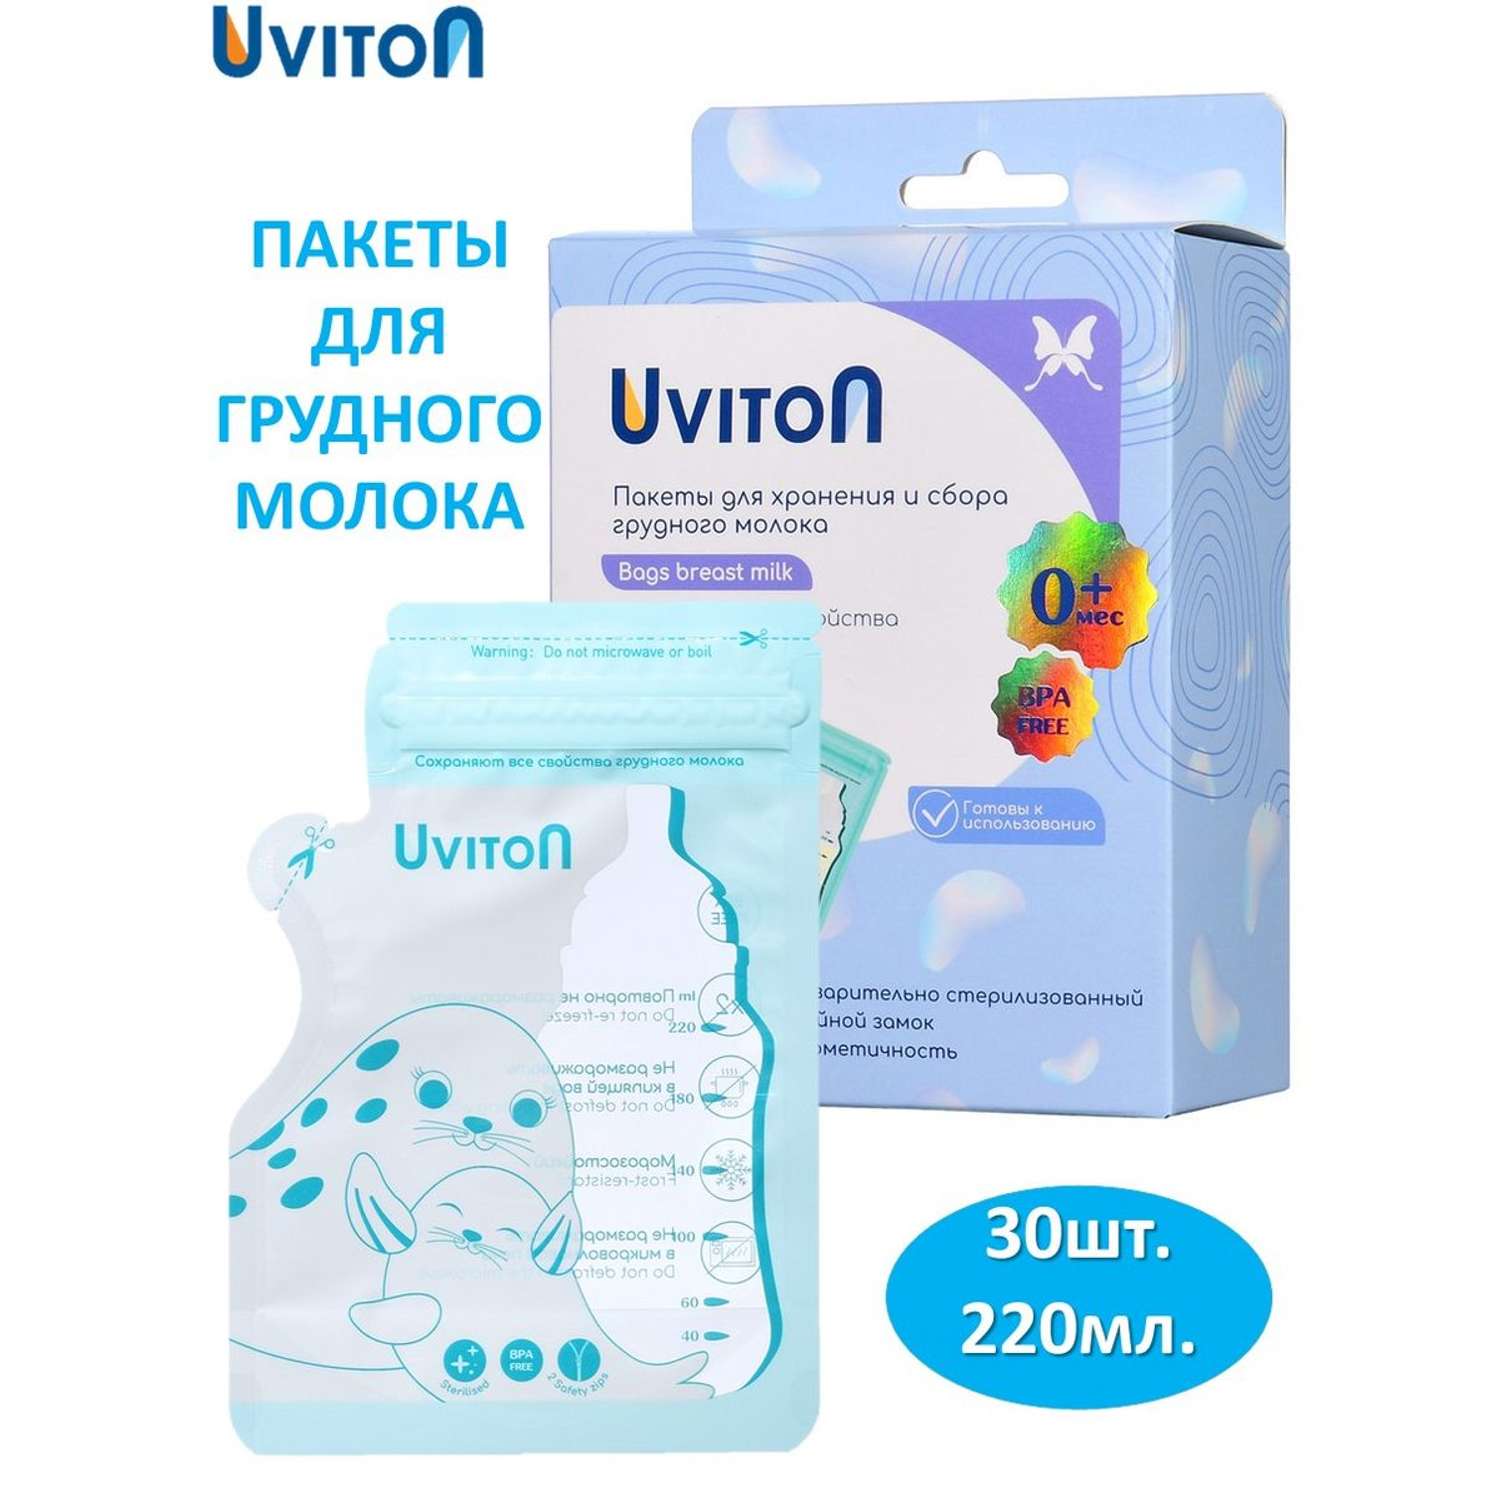 Пакеты для хранения и сбора Uviton грудного молока 30шт 220 мл - фото 1